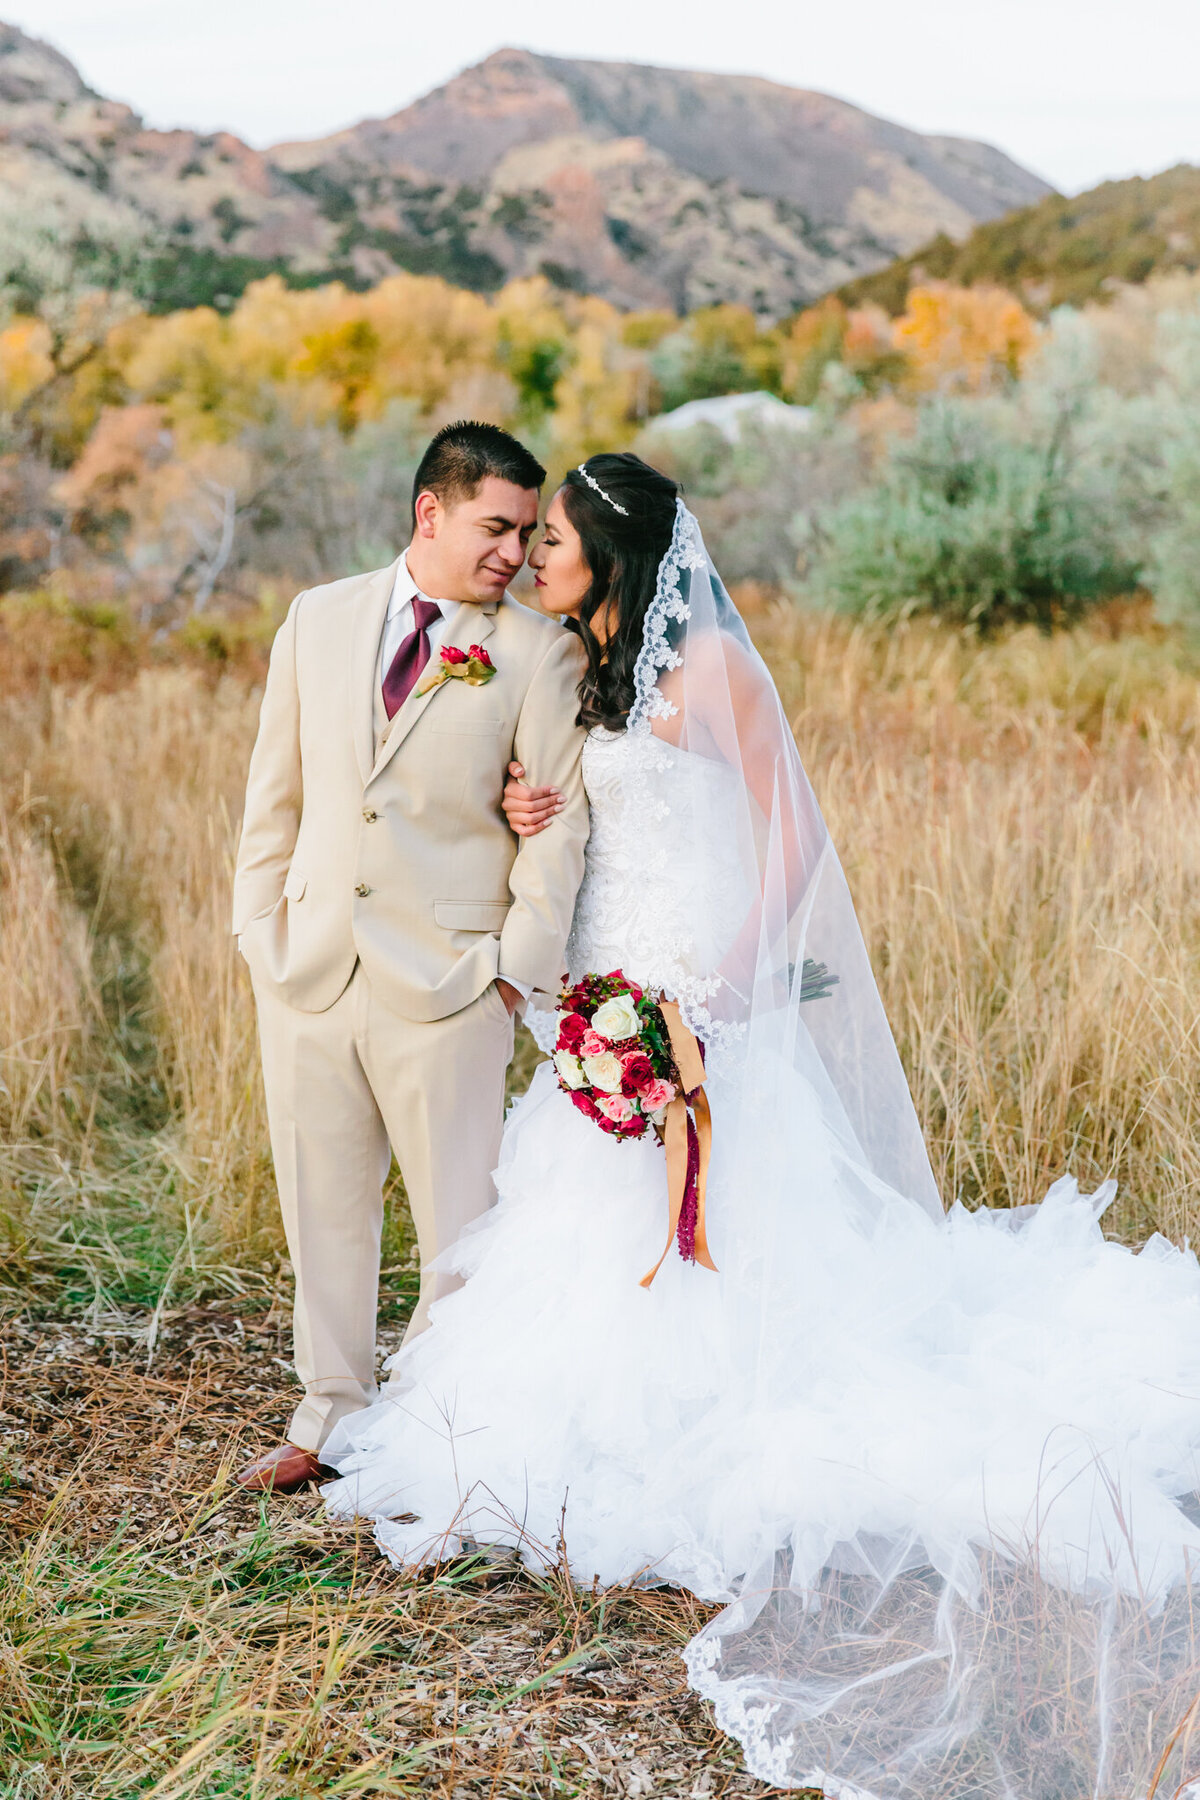 Idaho Falls wedding portrait photographer